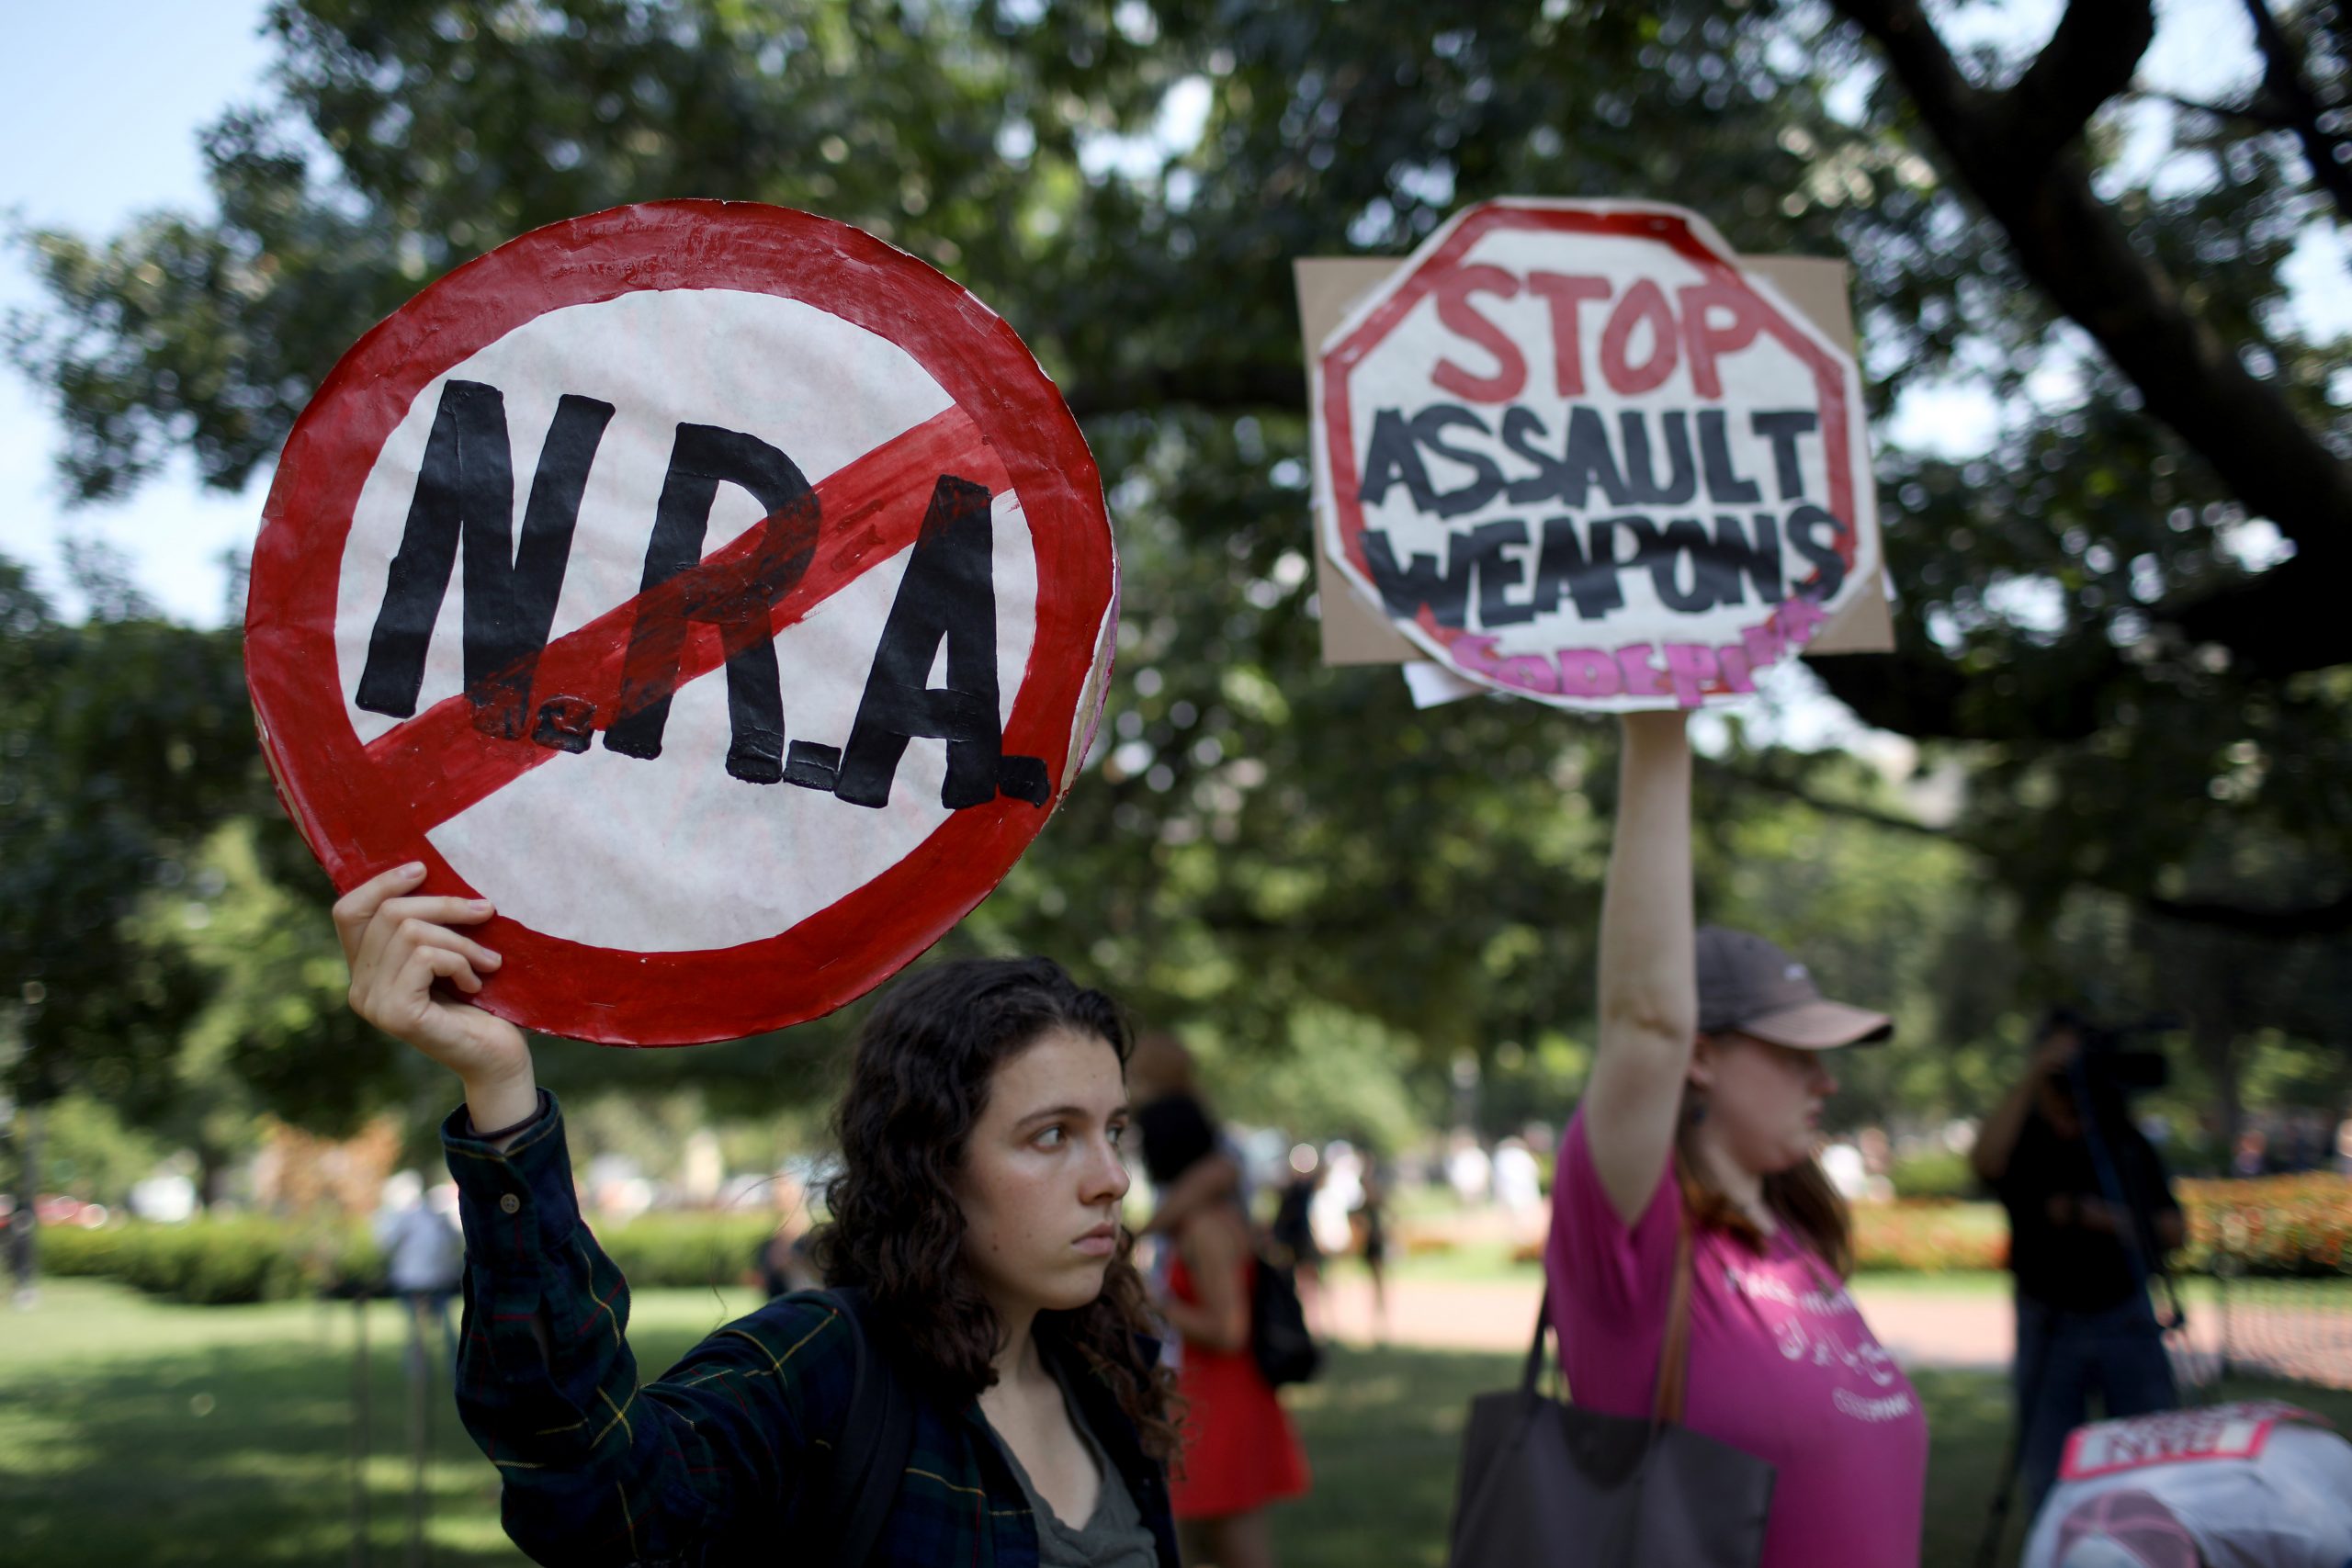 'Enough is enough' say thousands demanding new gun measures